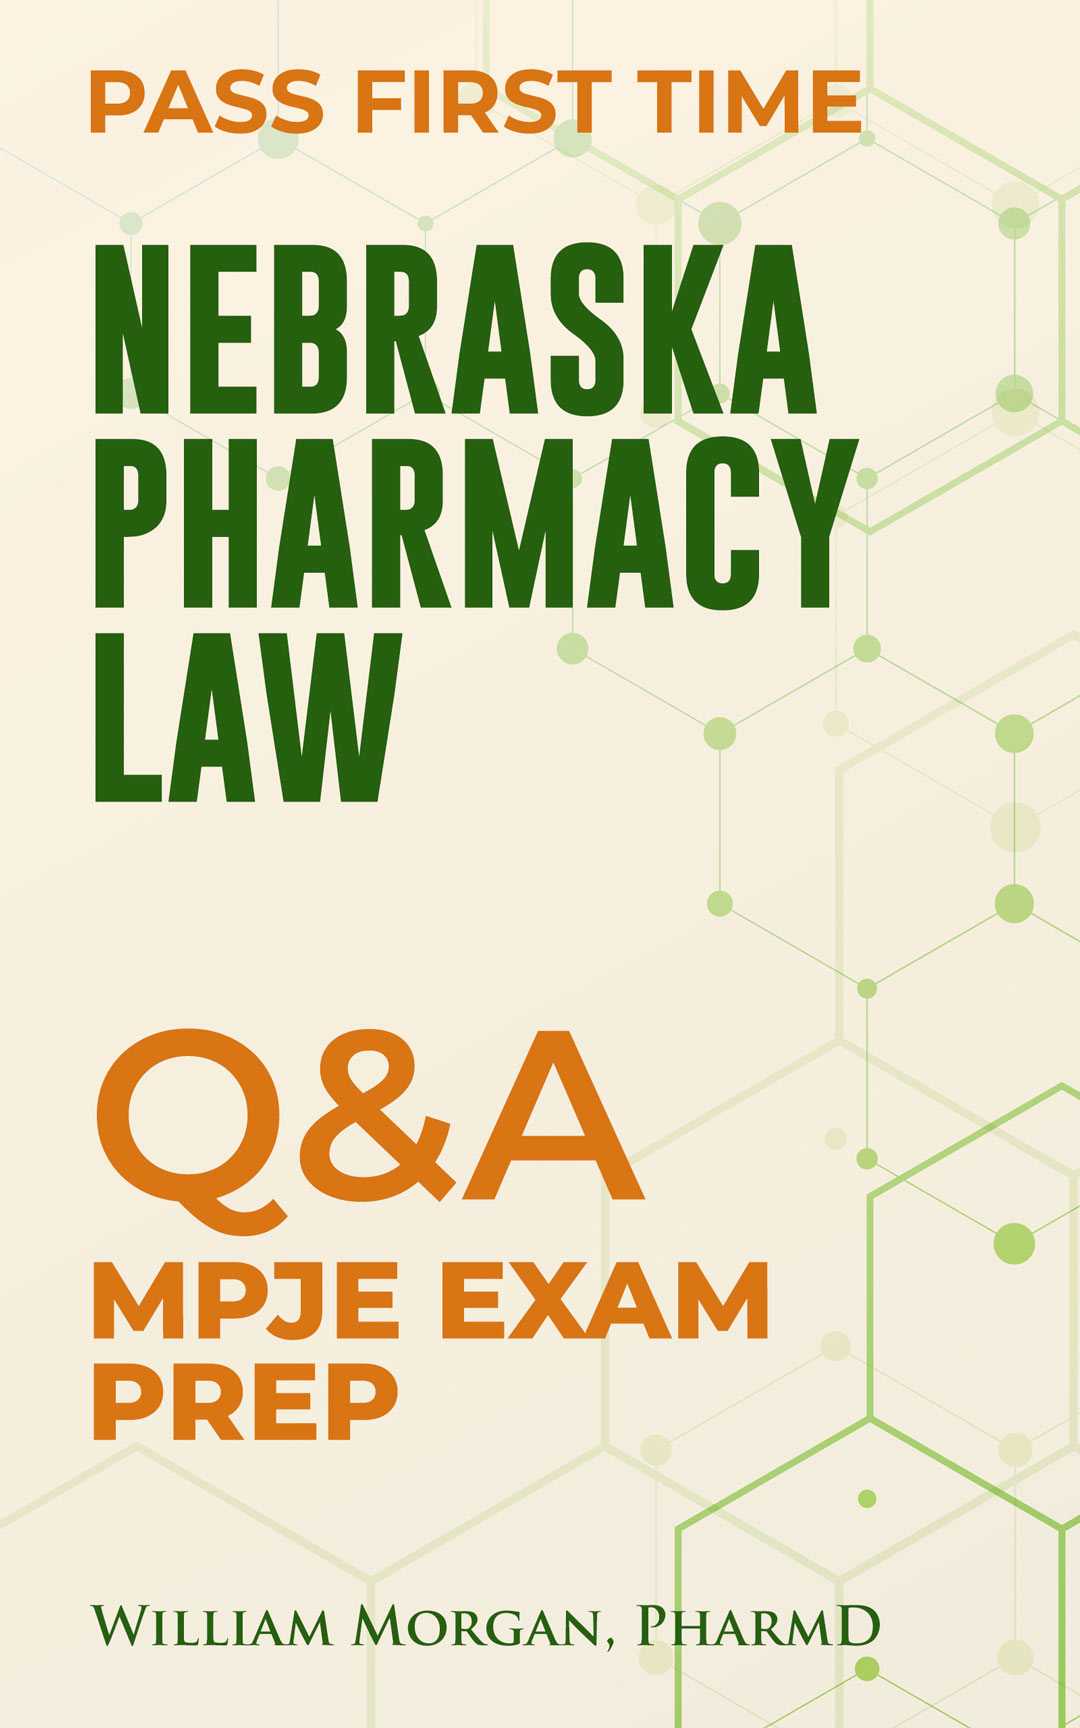 Nebraska Pharmacy Law MPJE Exam Prep Q & A